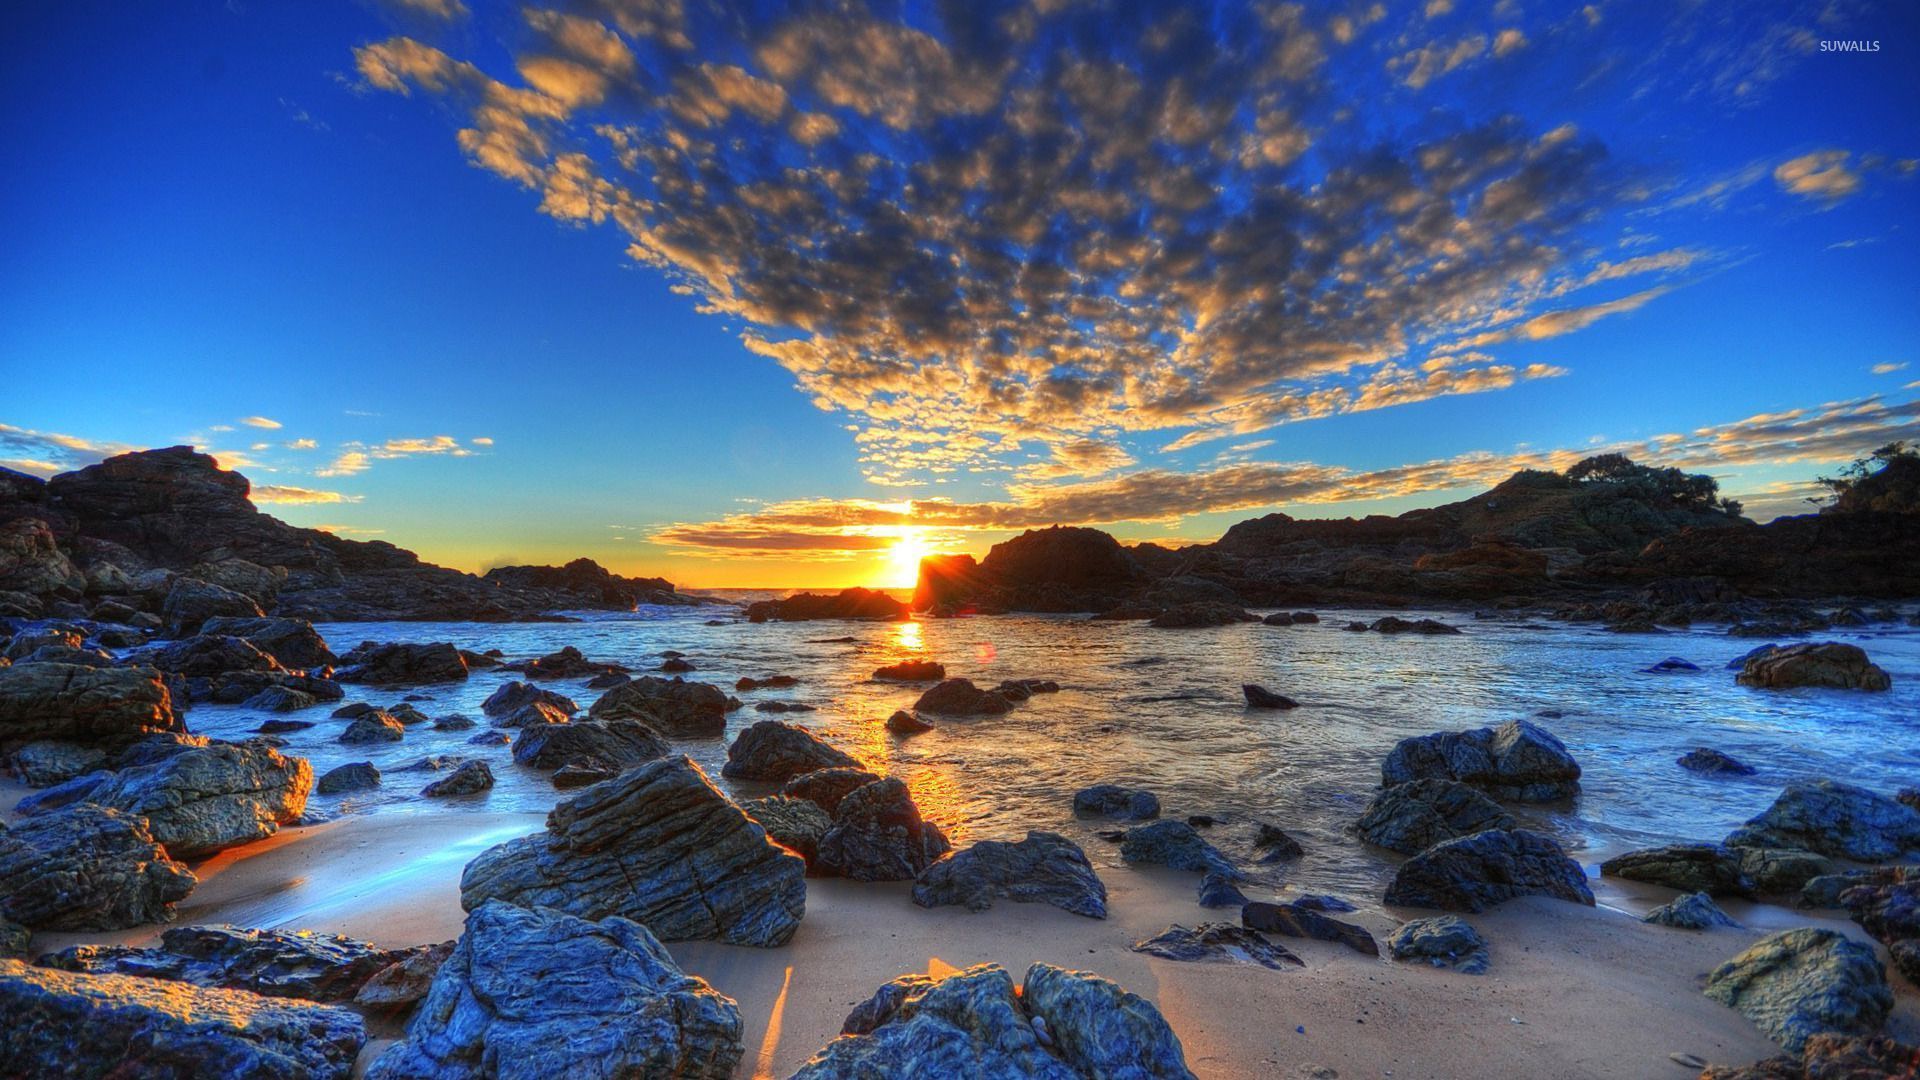 Golden sunset above the sea wallpaper - Fondos de pantalla de playa - # 54053